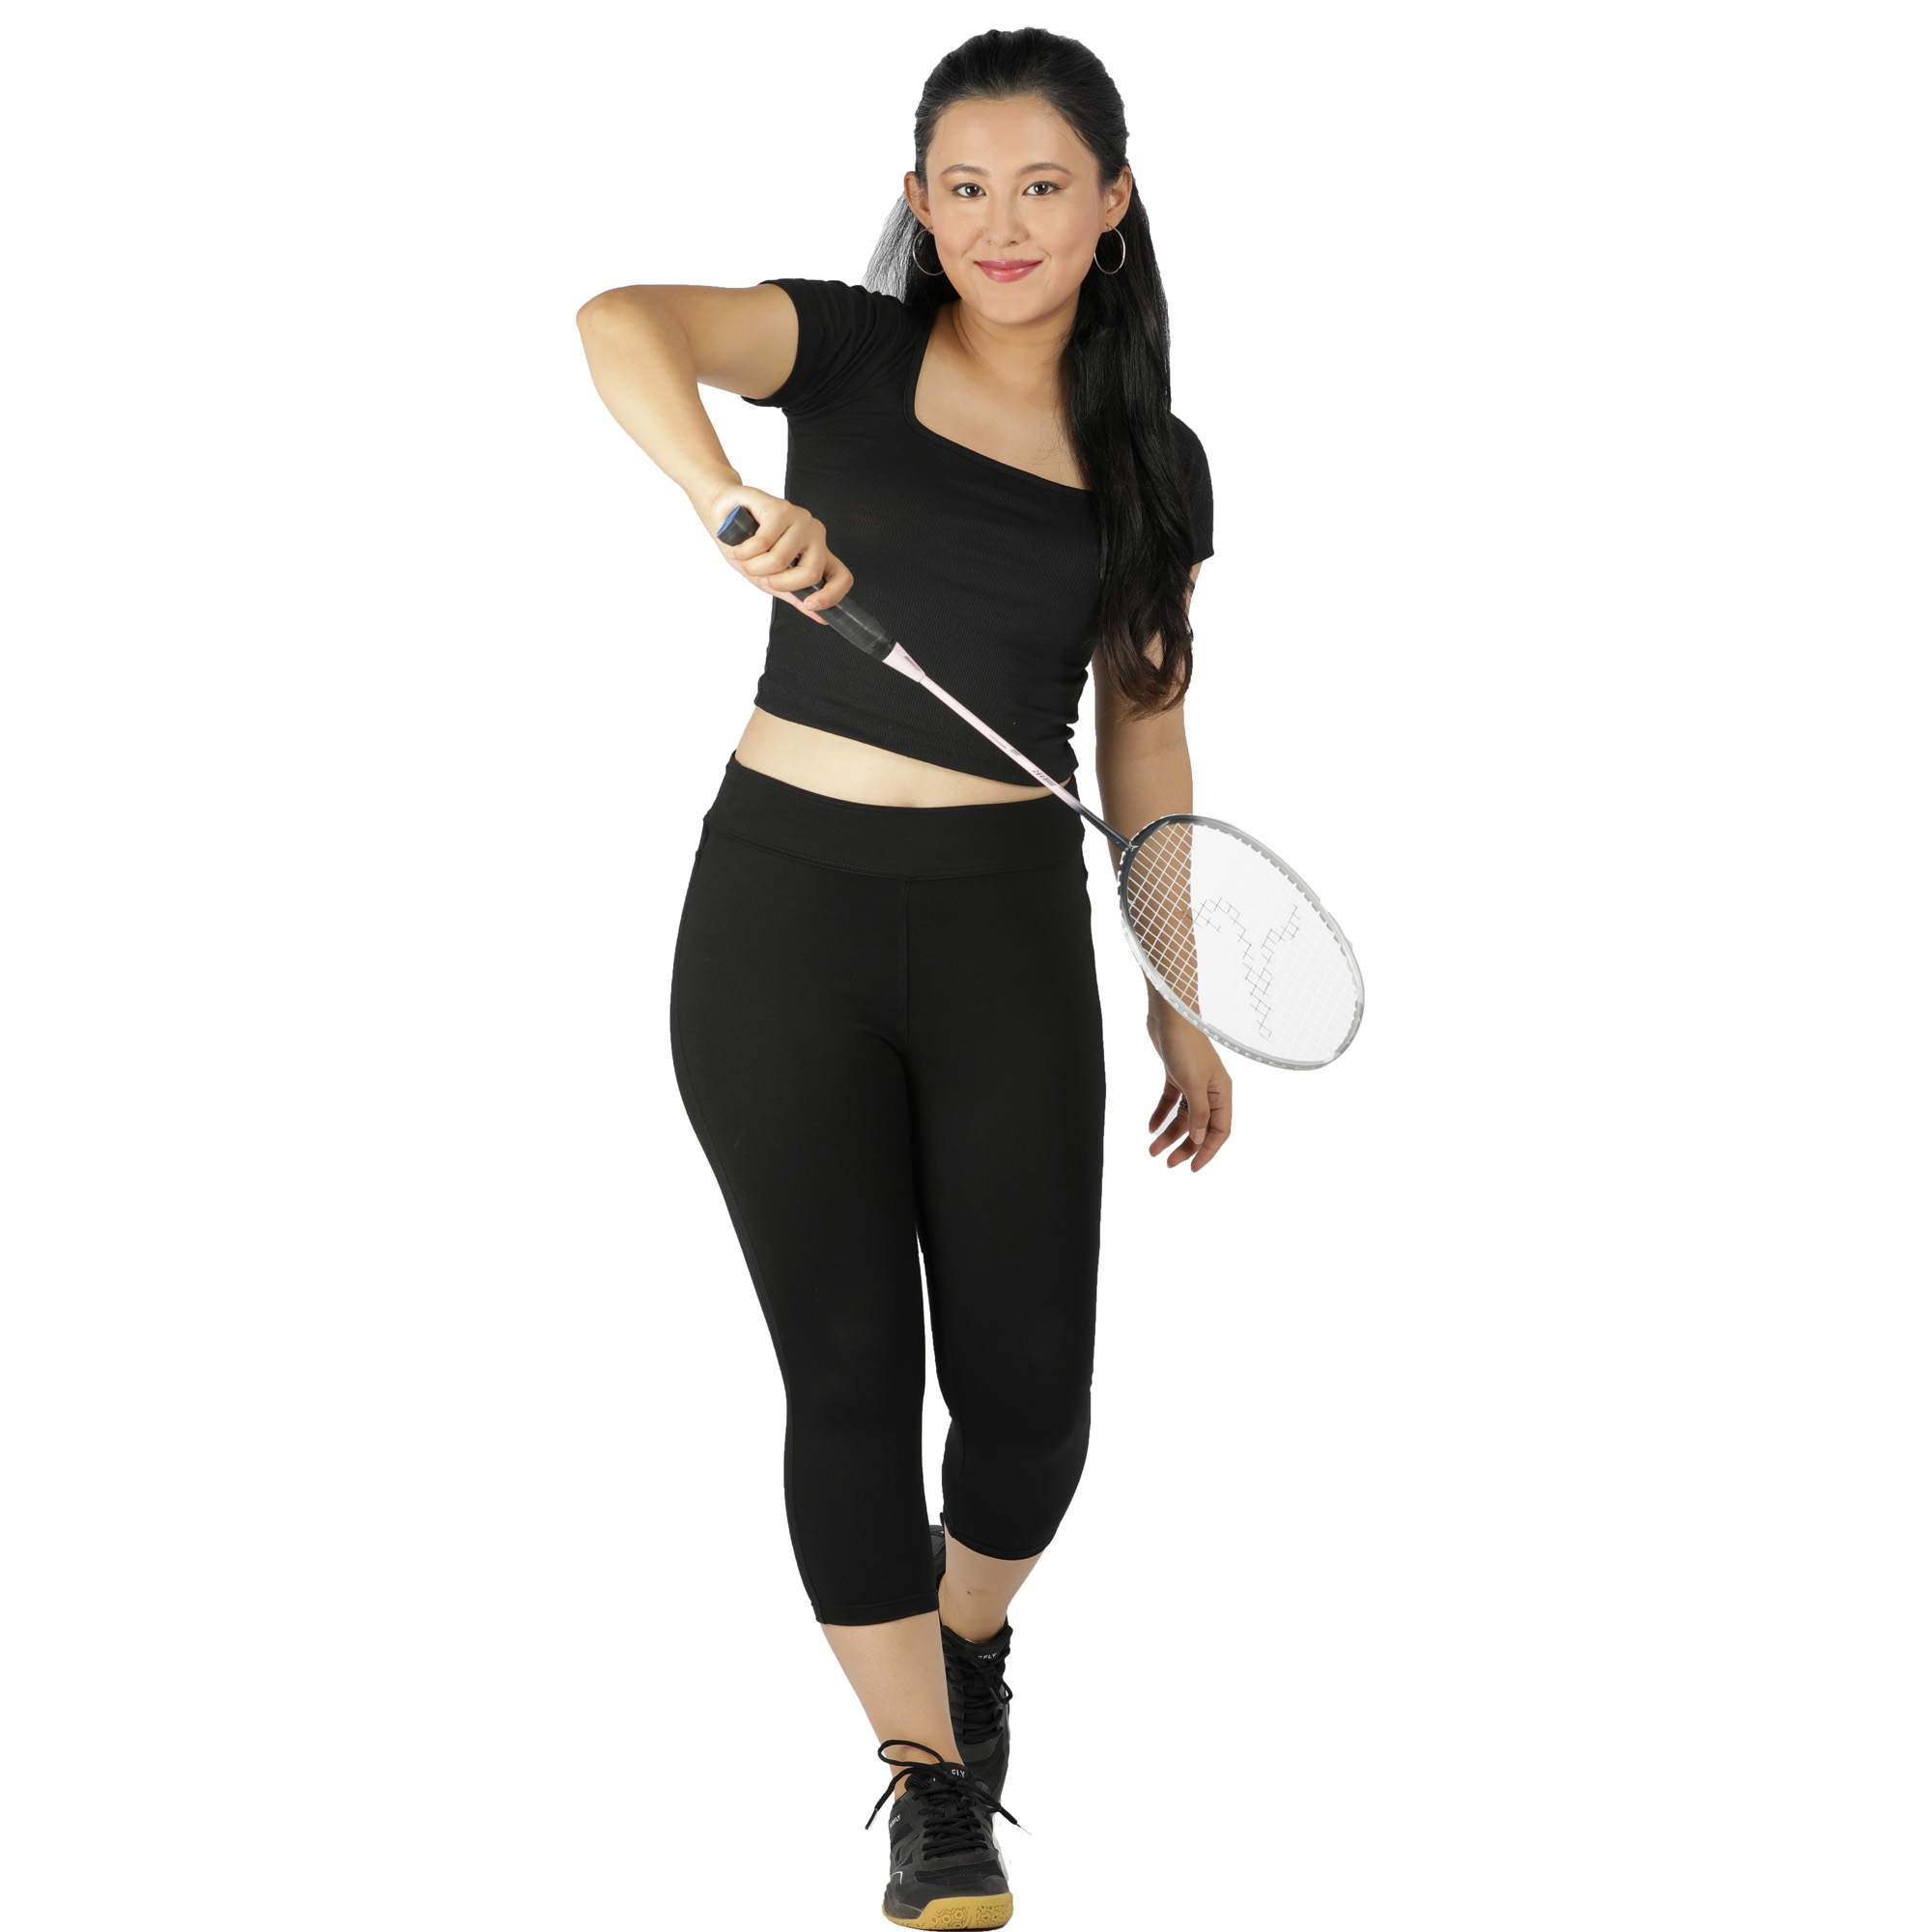 Black capris for women gym wear Low rise - Belore Slims